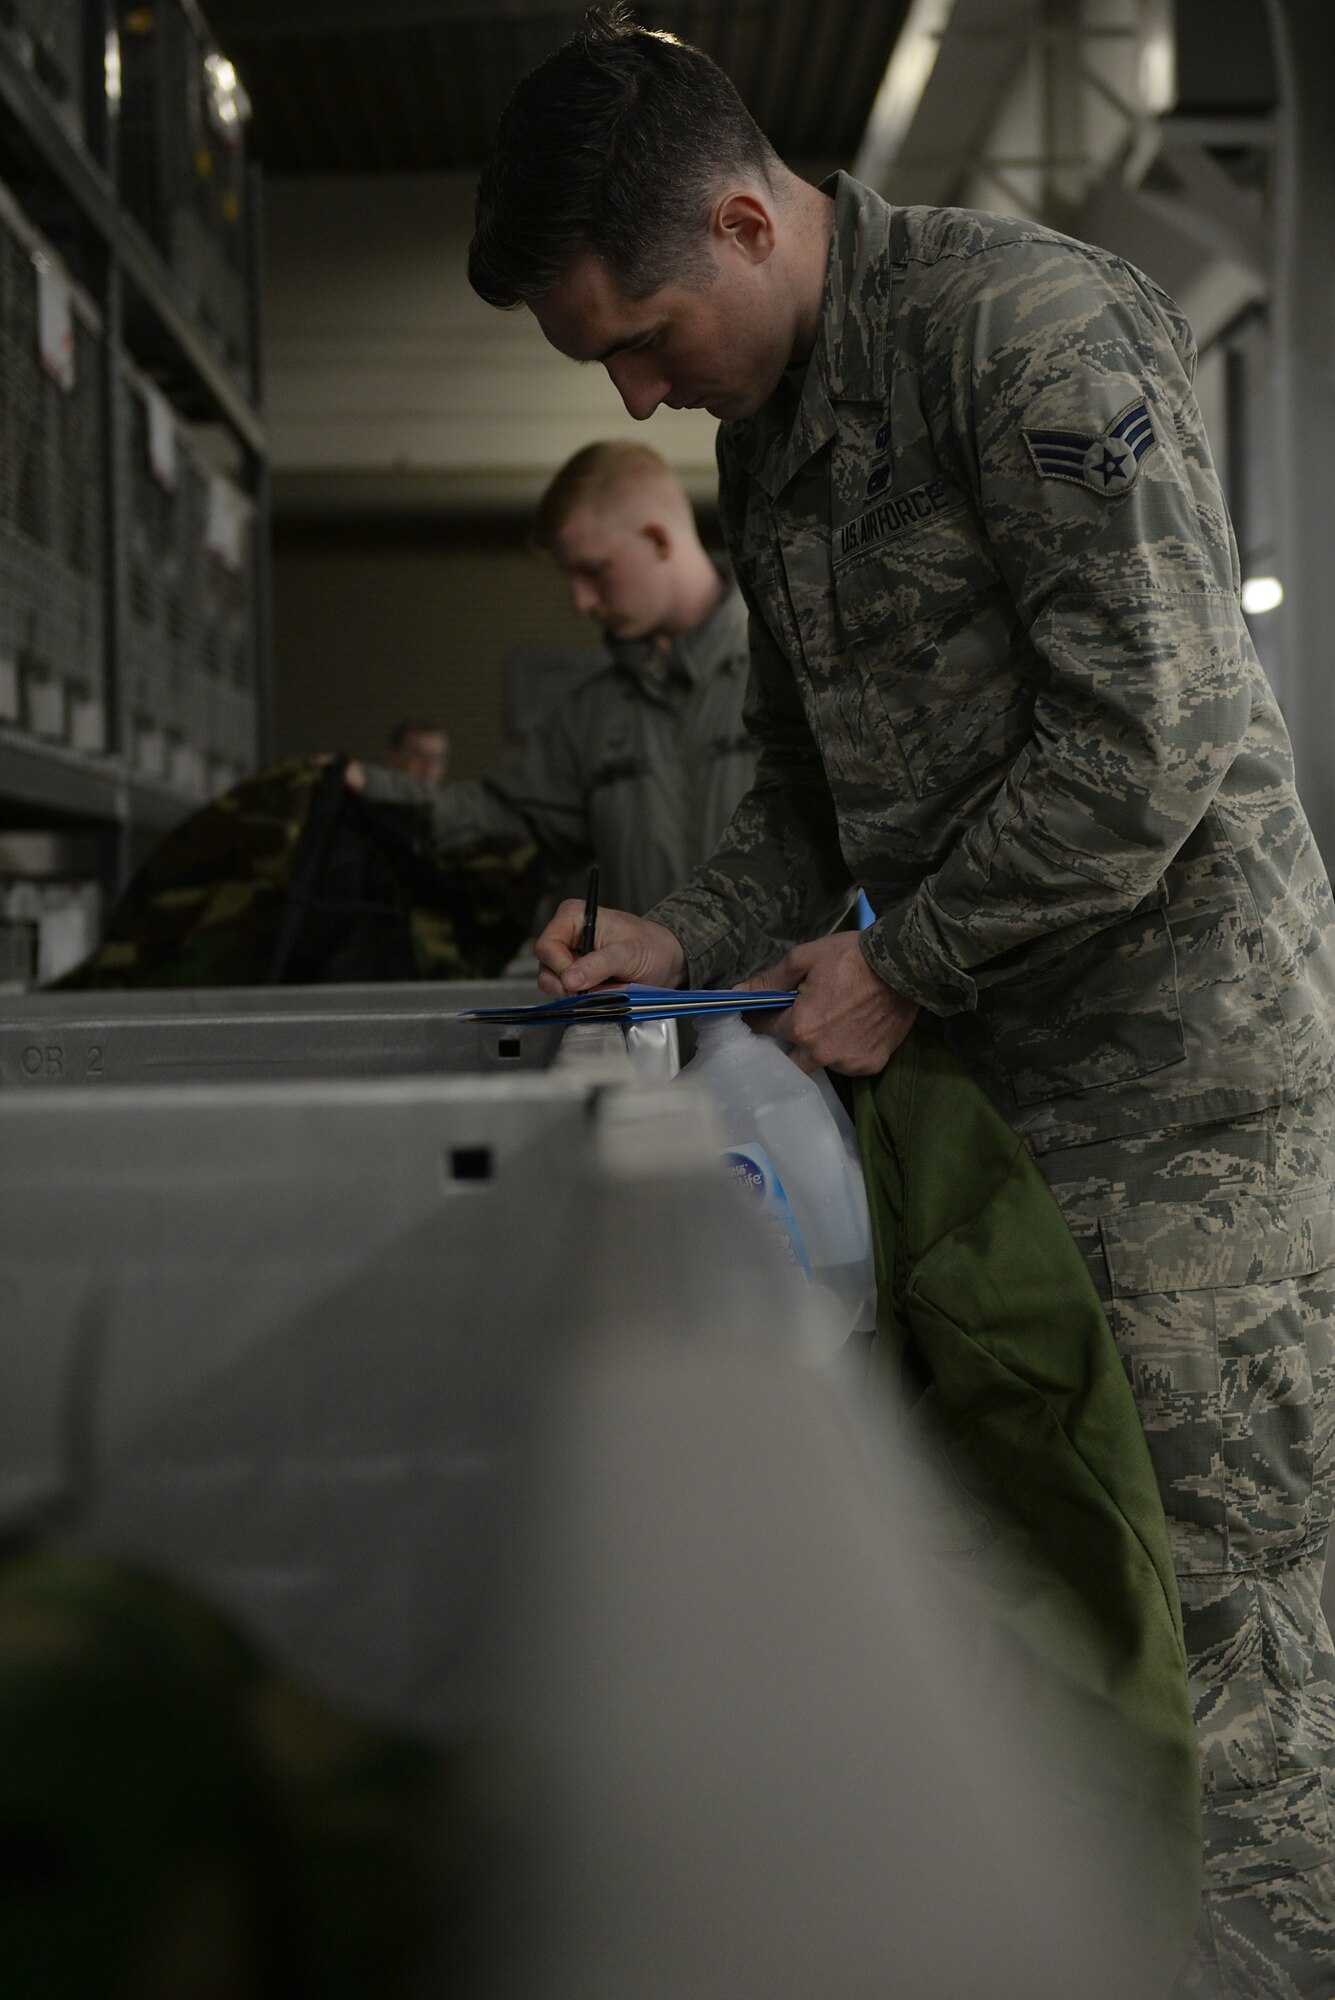 Three Airmen in Air Force Battle Uniforms grab MOPP gear out of bins.